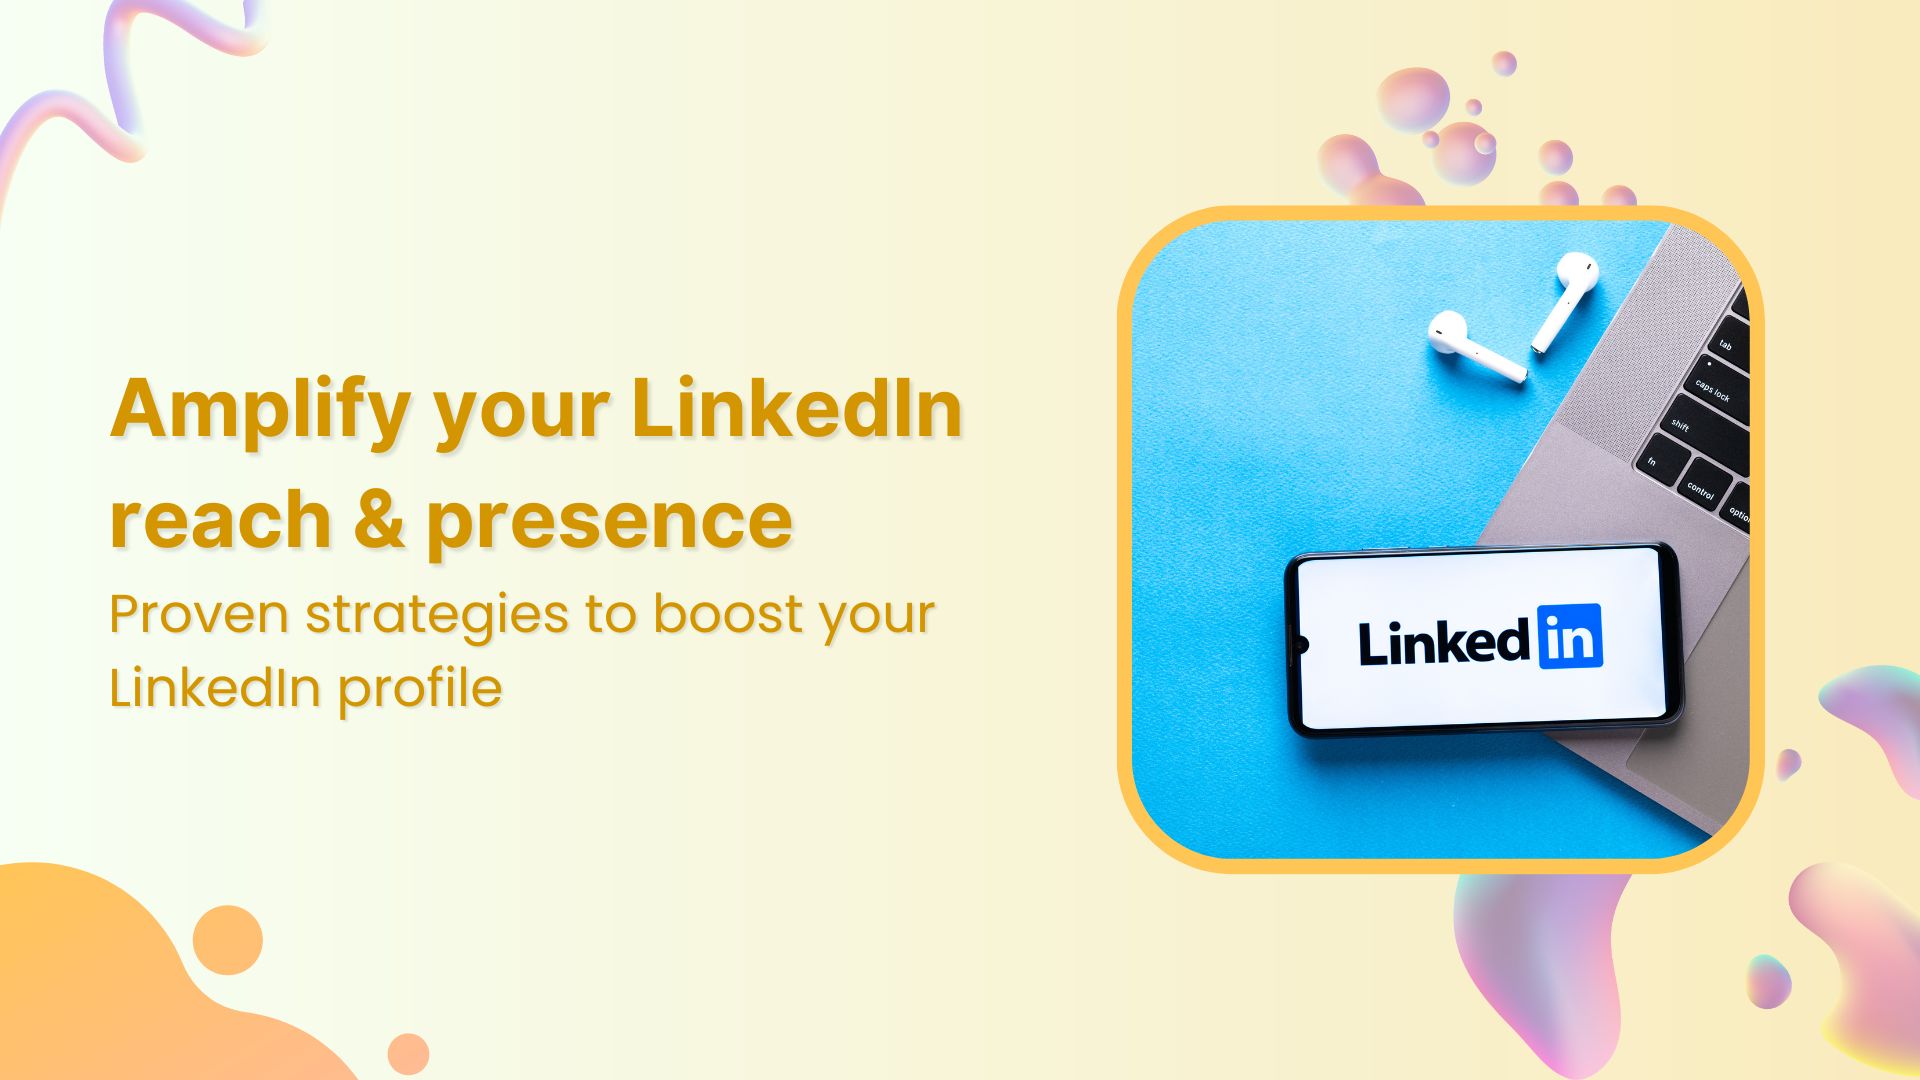 15 strategies to amplify your LinkedIn reach & presence